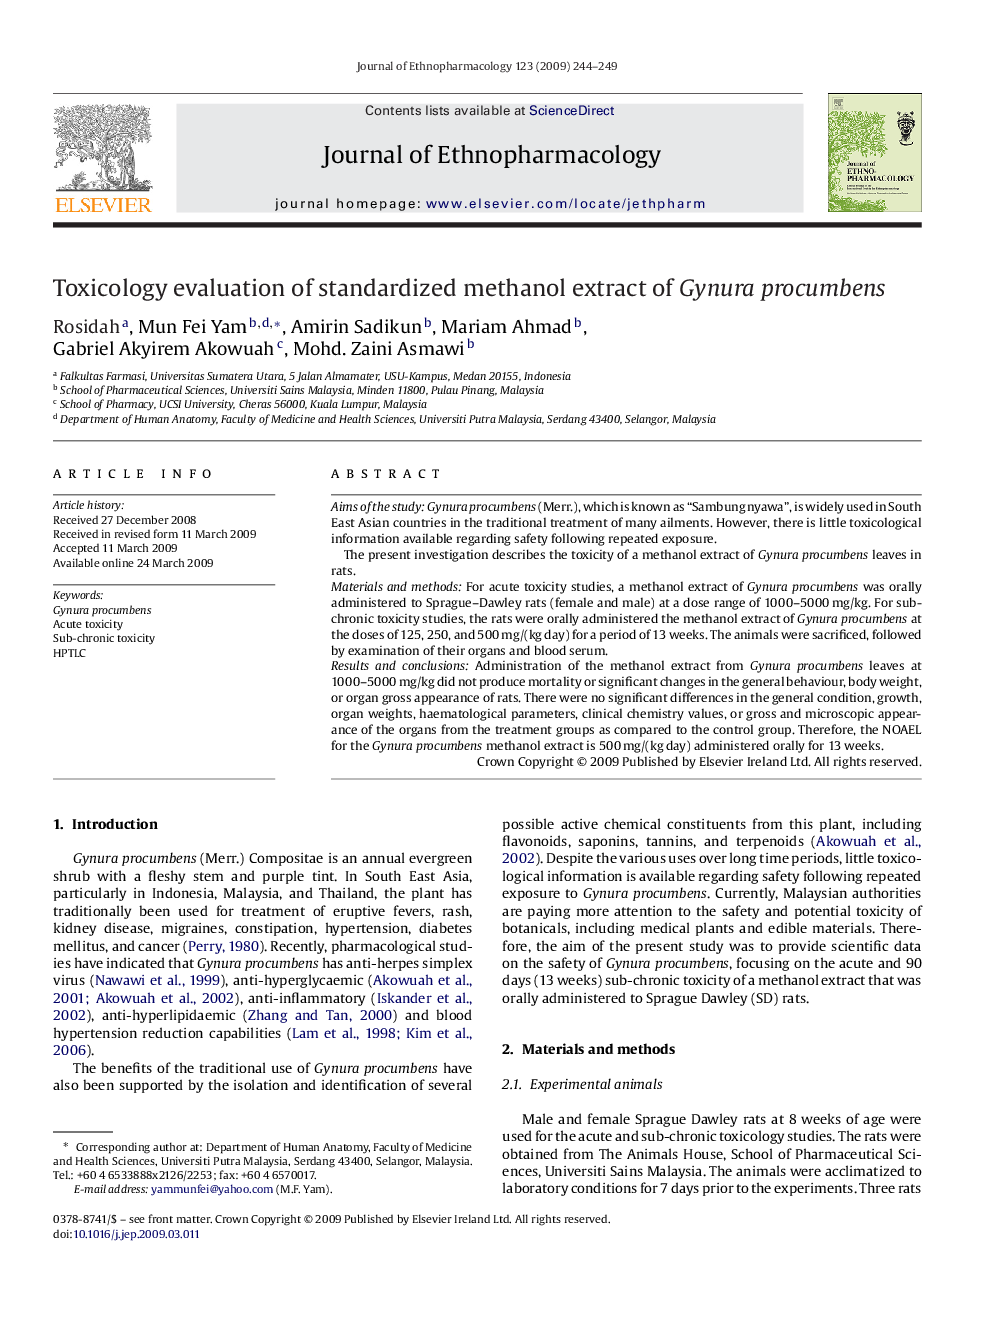 Toxicology evaluation of standardized methanol extract of Gynura procumbens